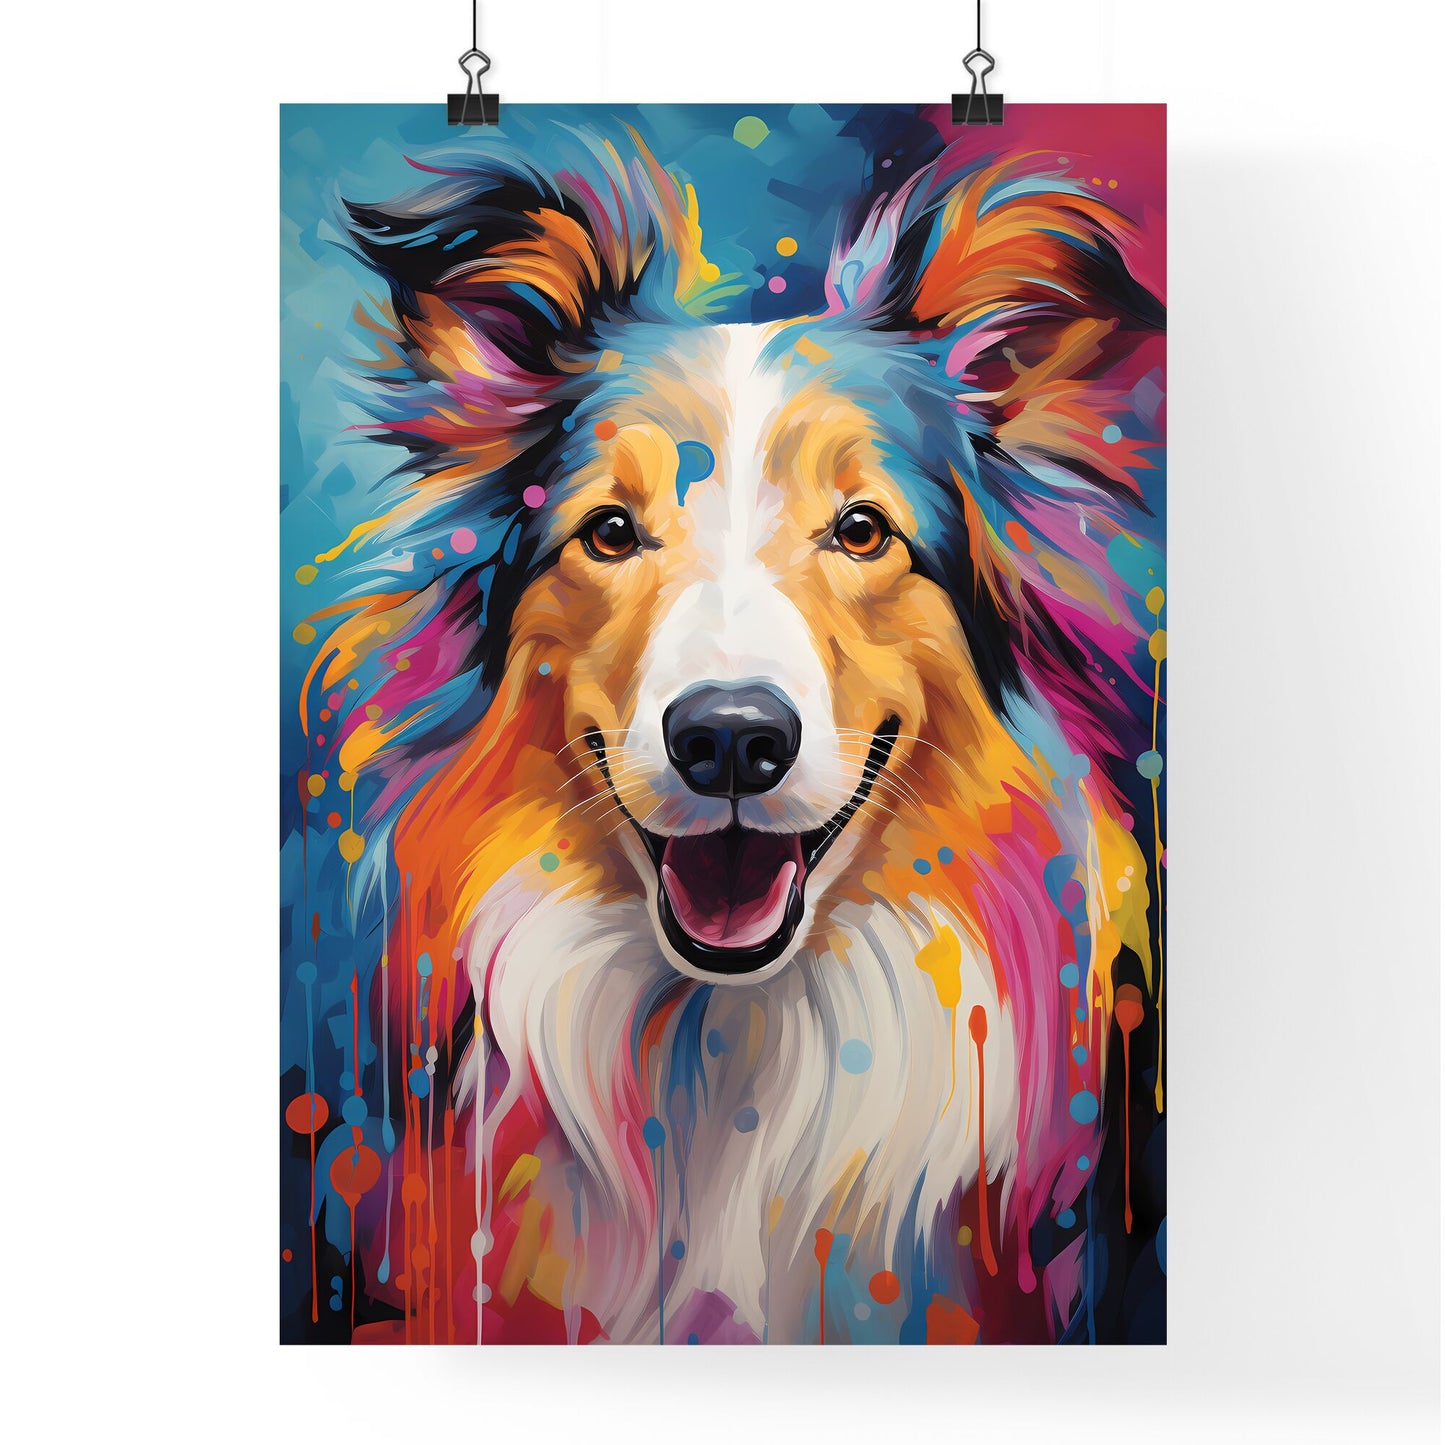 Lassie - A Dog With Colorful Paint Splatters Default Title